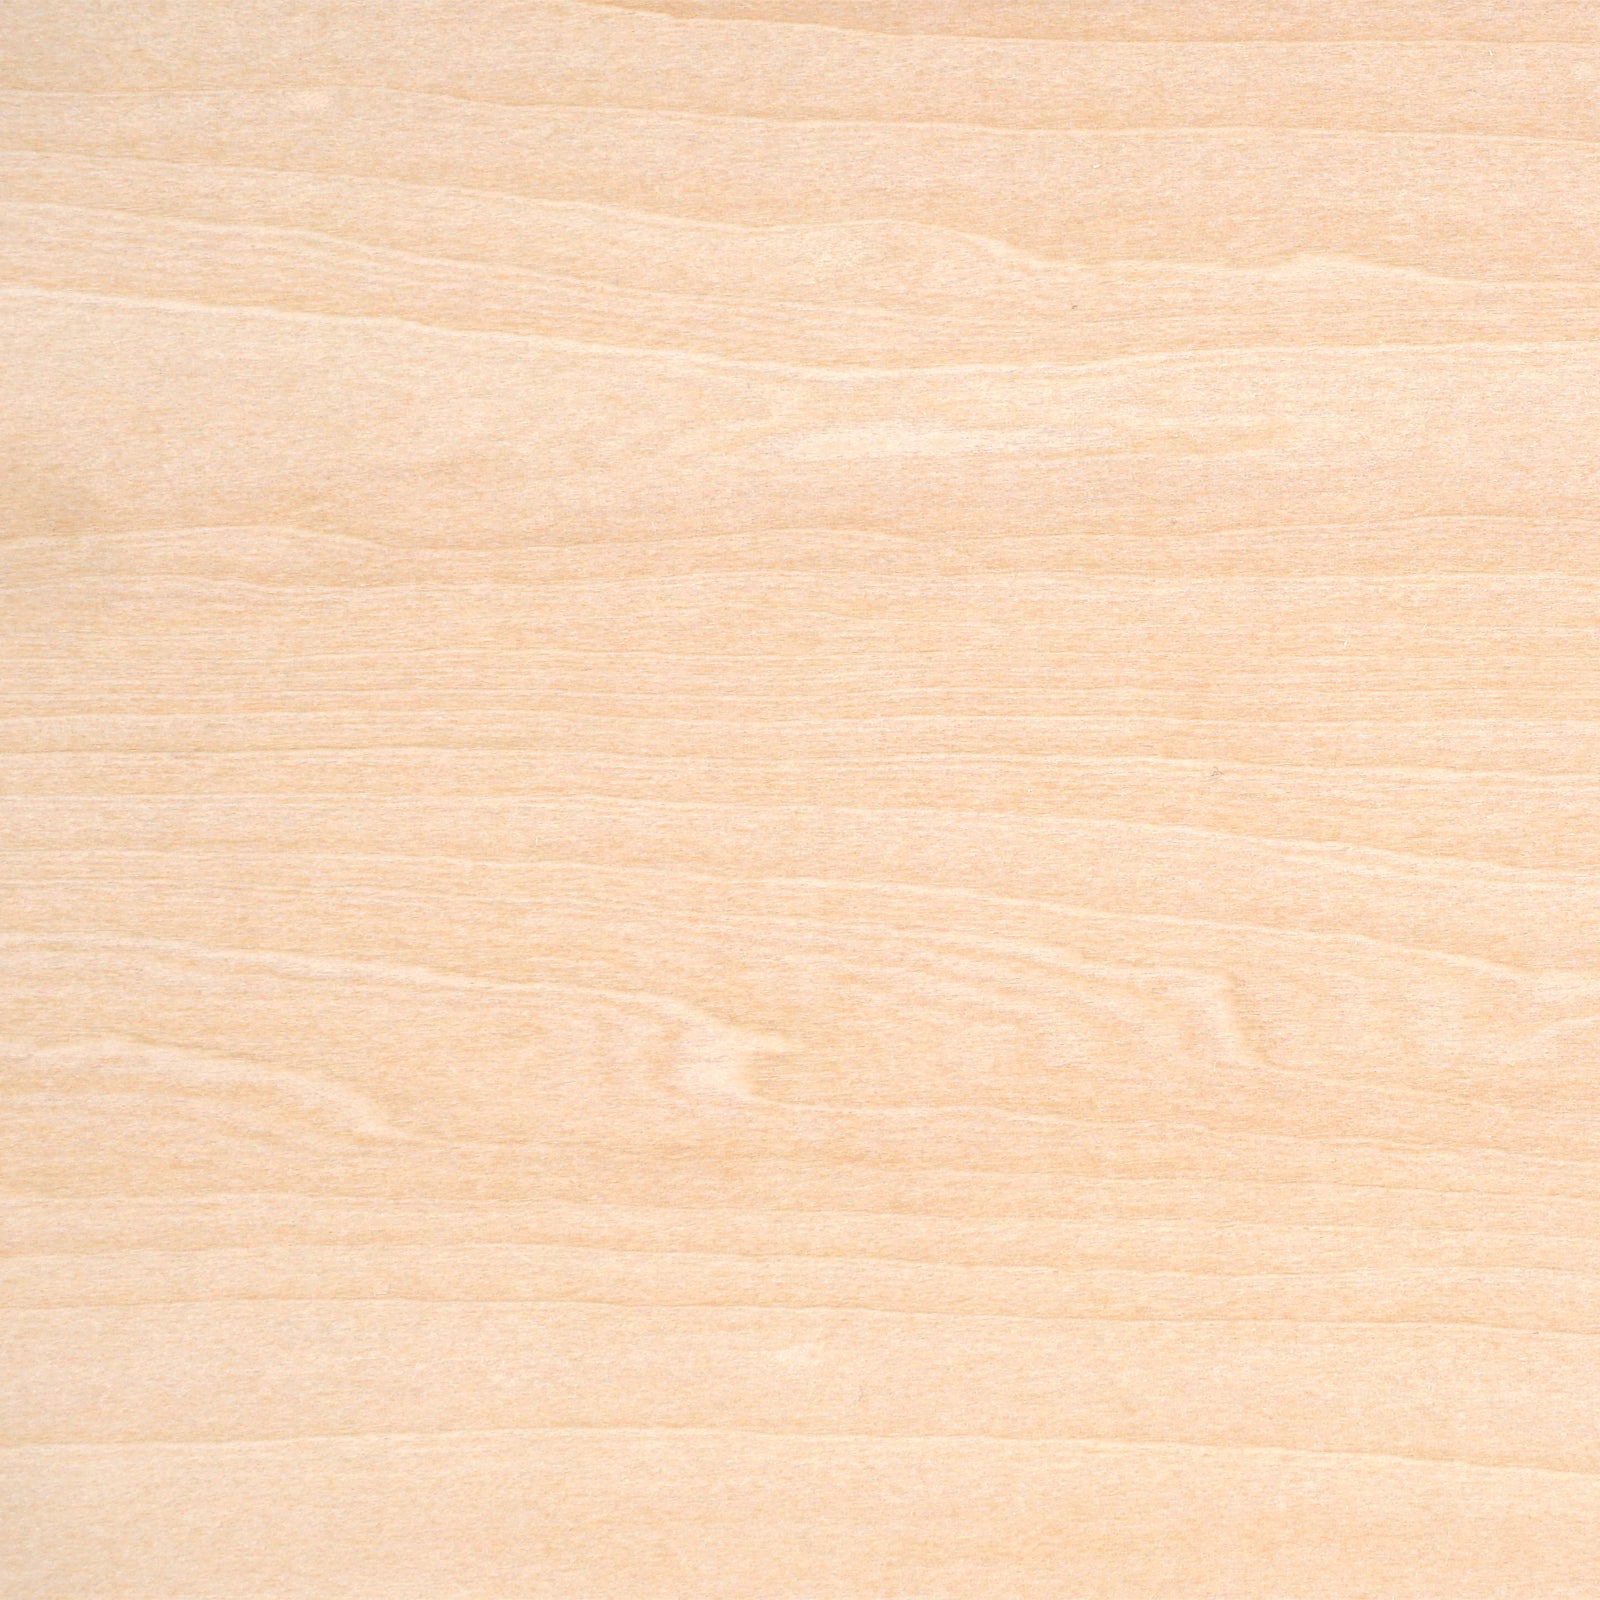 3mm Basswood Sheets Plywood（10pcs）